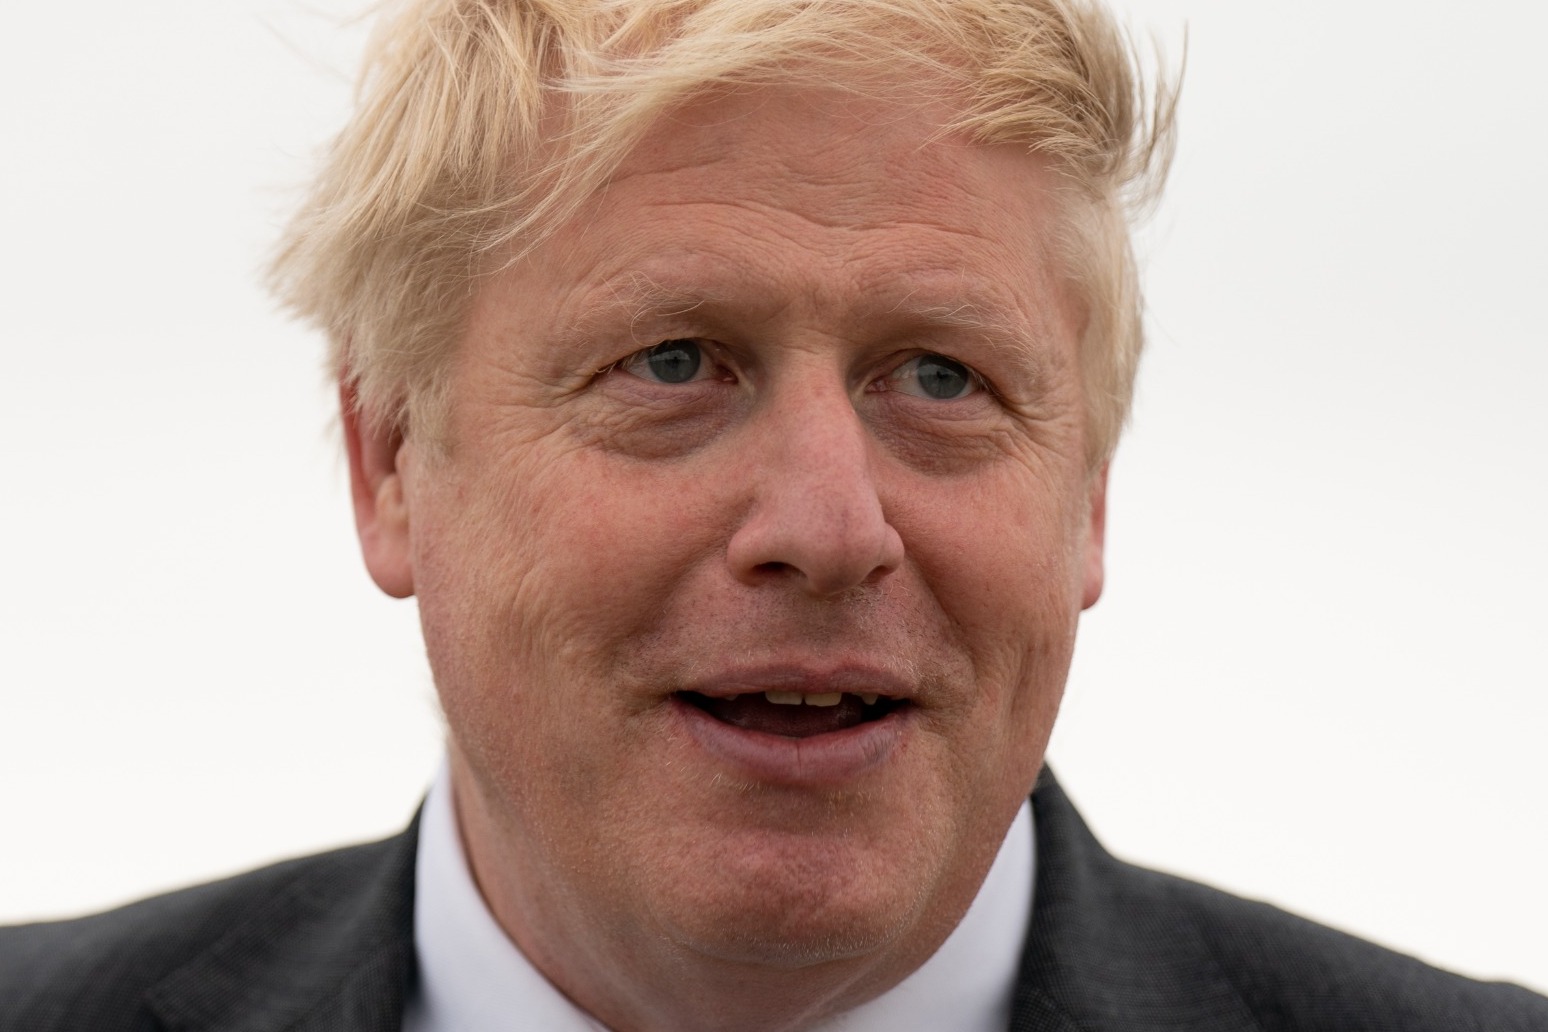 Boris Johnson undergoes ‘minor routine operation’ for sinuses 